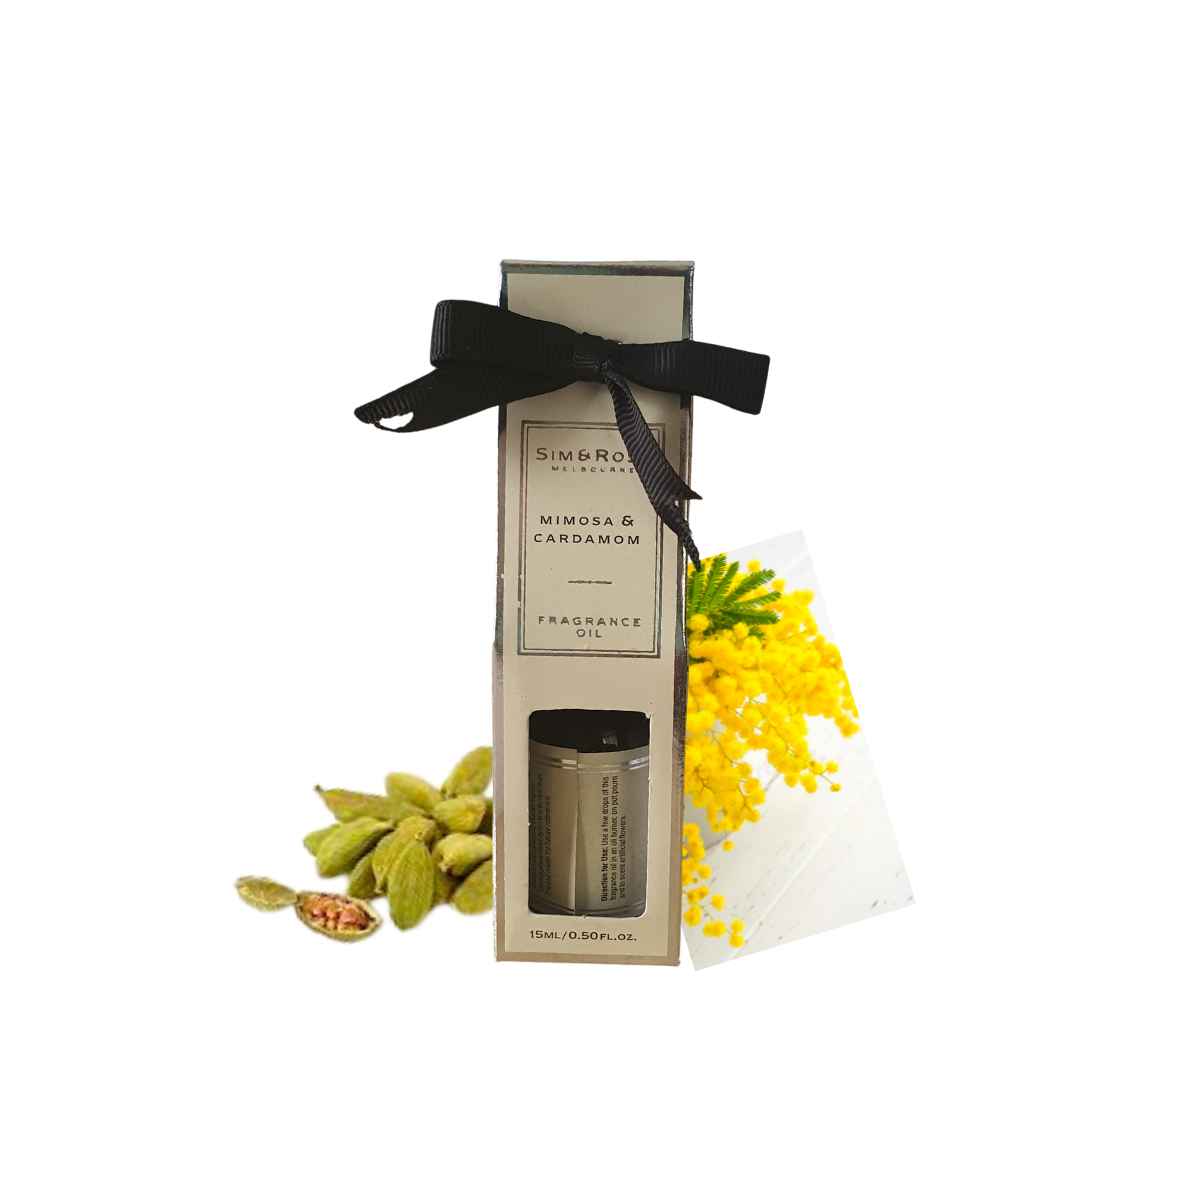 mimosa and cardamom fragrance oil